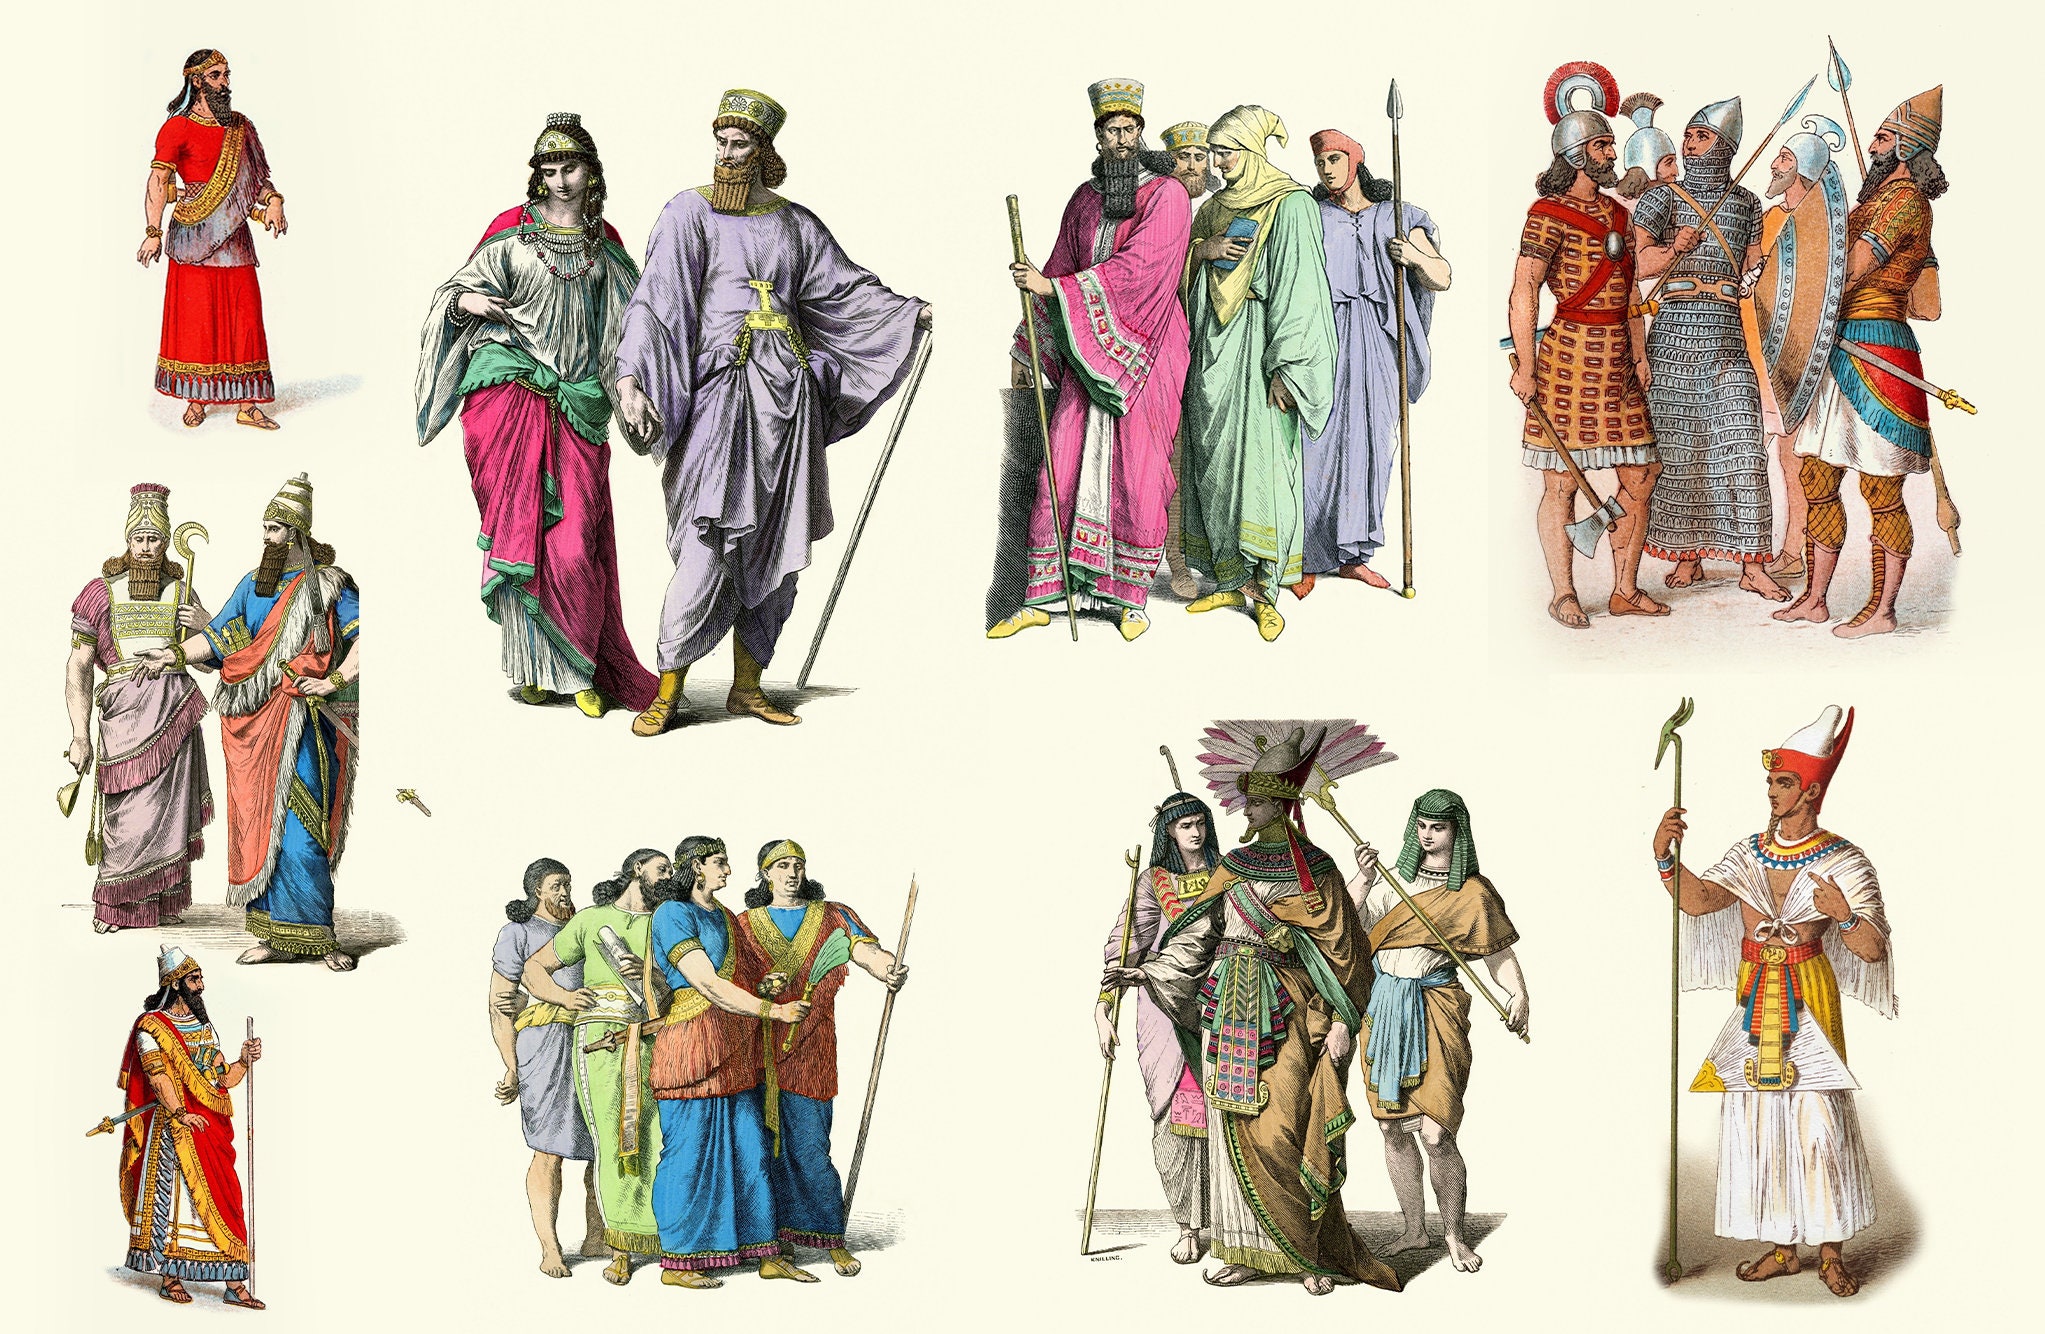 Ancient Egyptian, Mesopotamian & Persian Costume (Dover Fashion